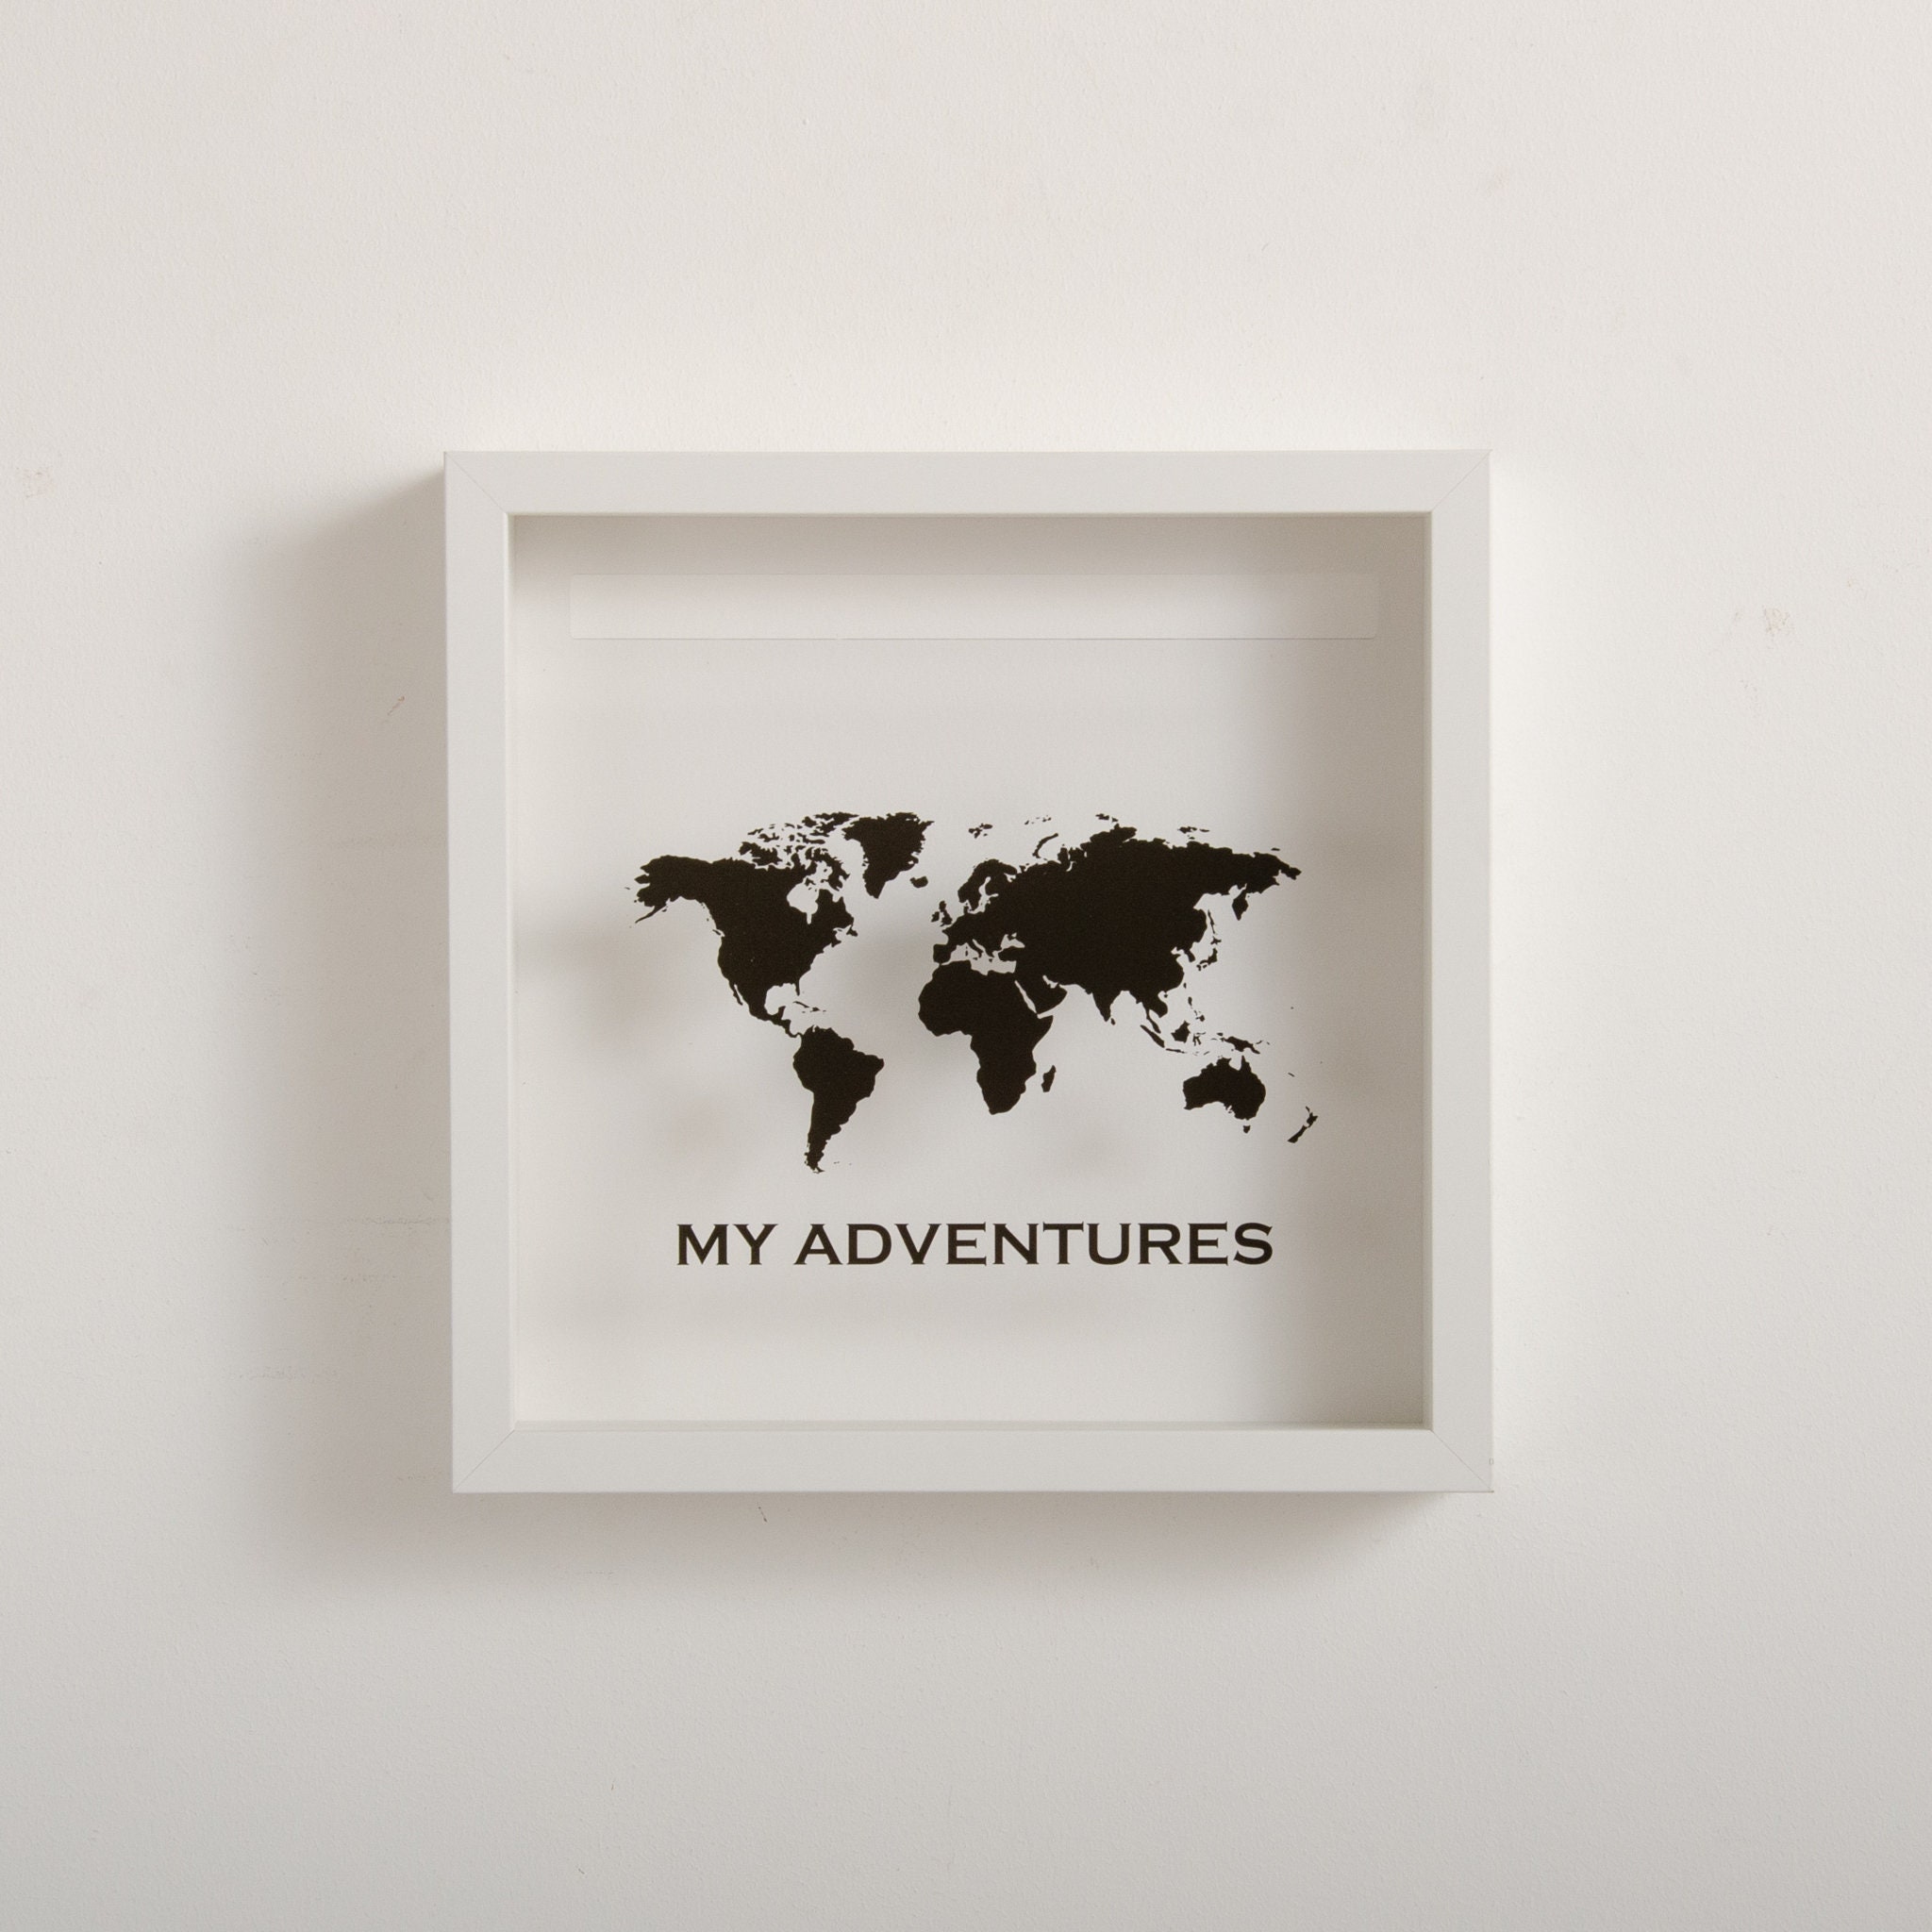 Travel Memory Box, Adventure Archive Box, Personalized Adventures